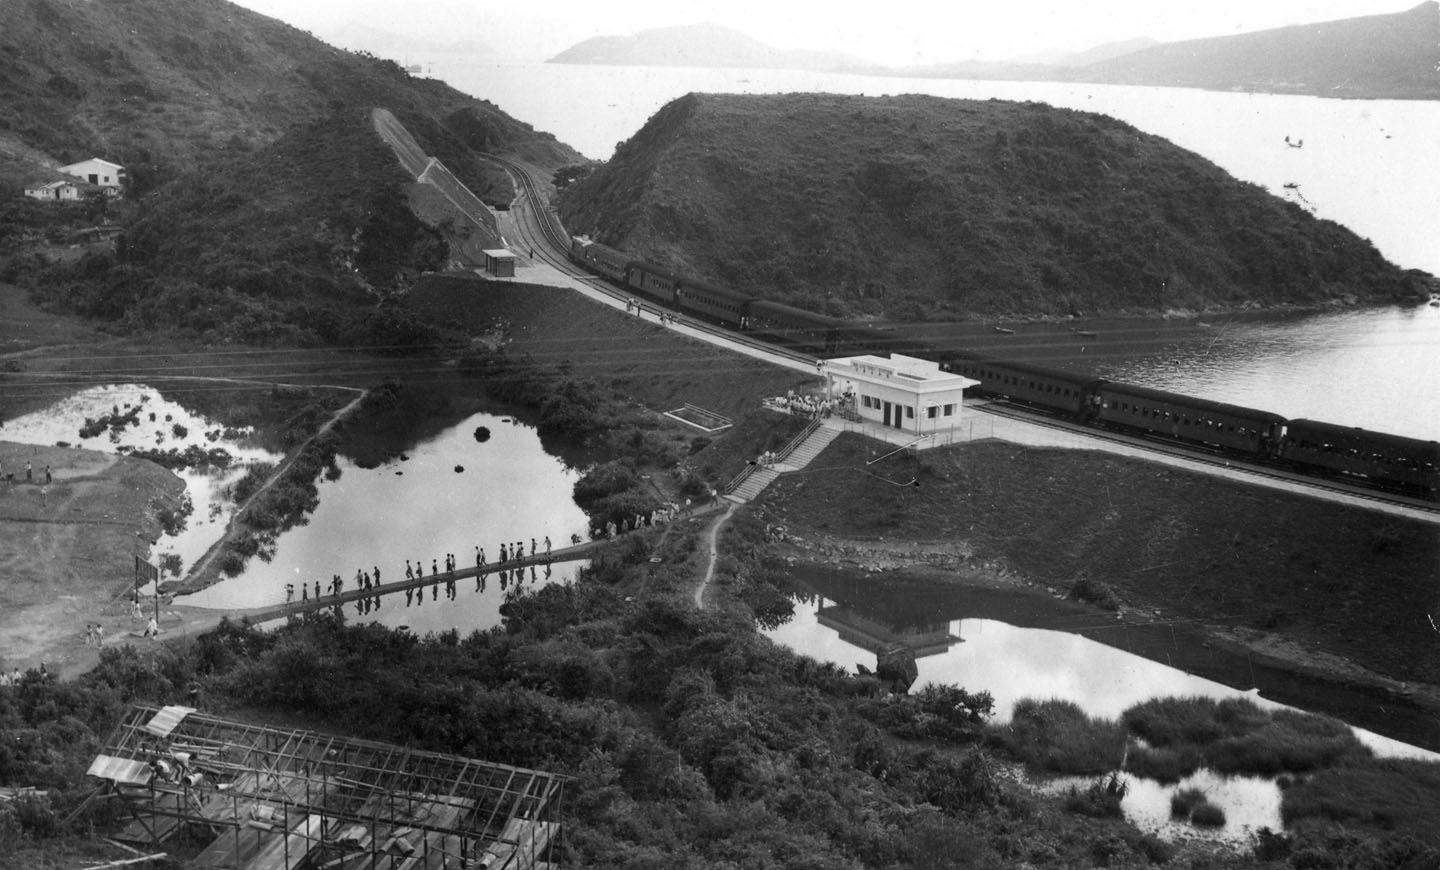 The Ma Liu Shui campus under construction (1956)